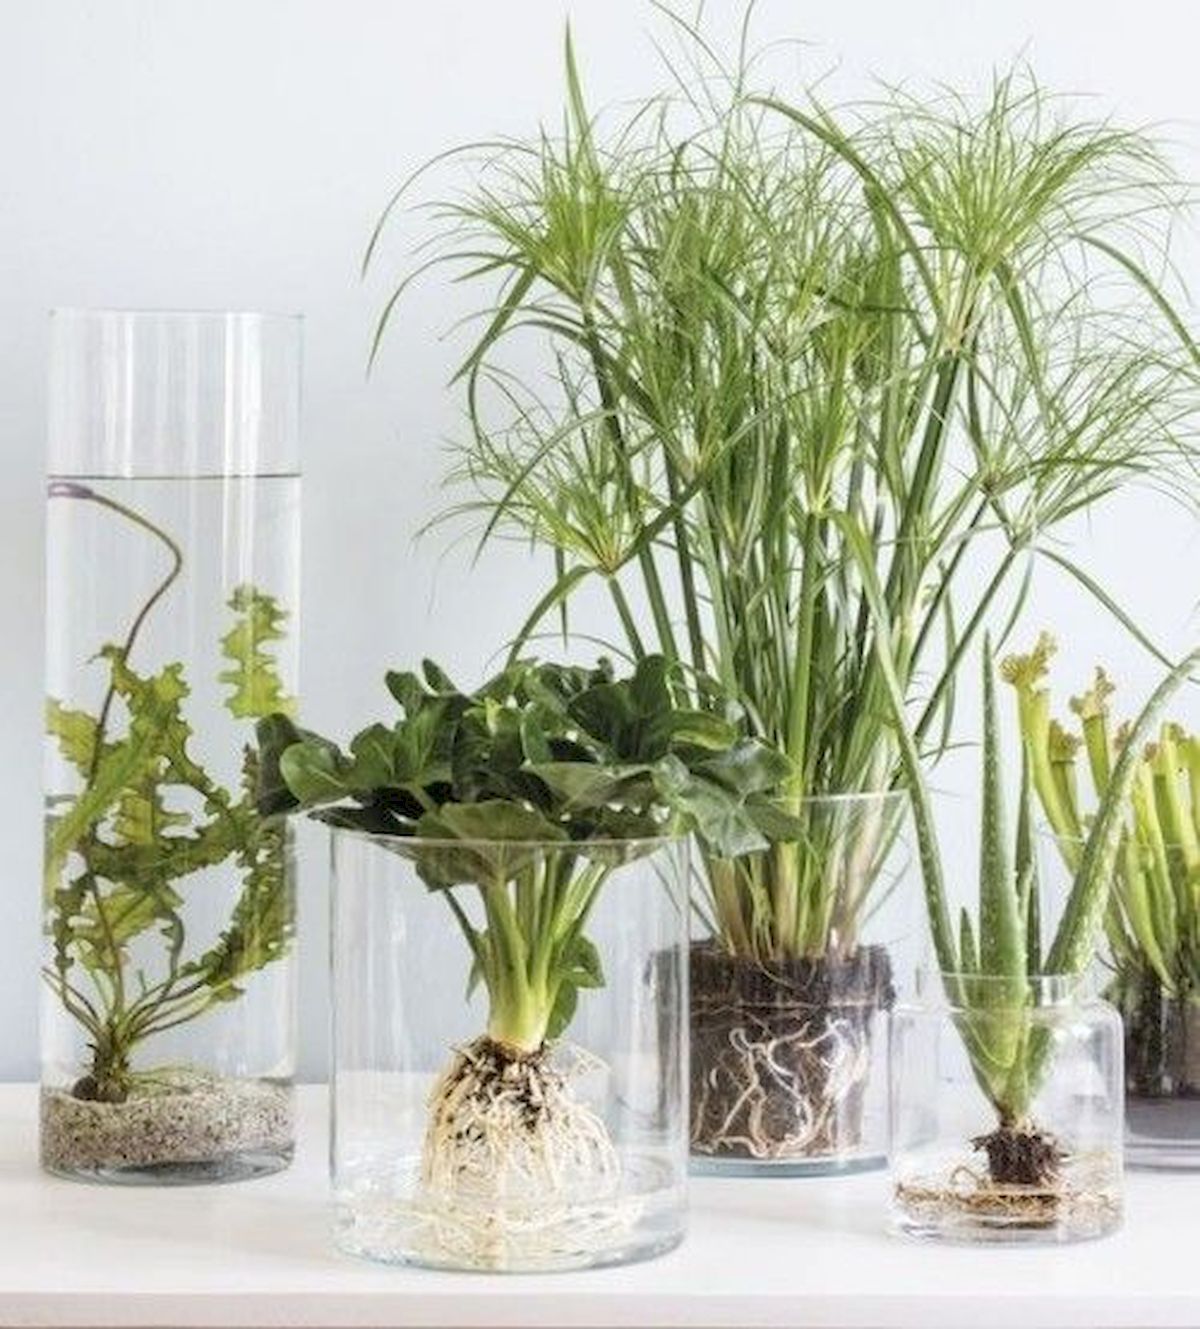 13 planting House glass ideas